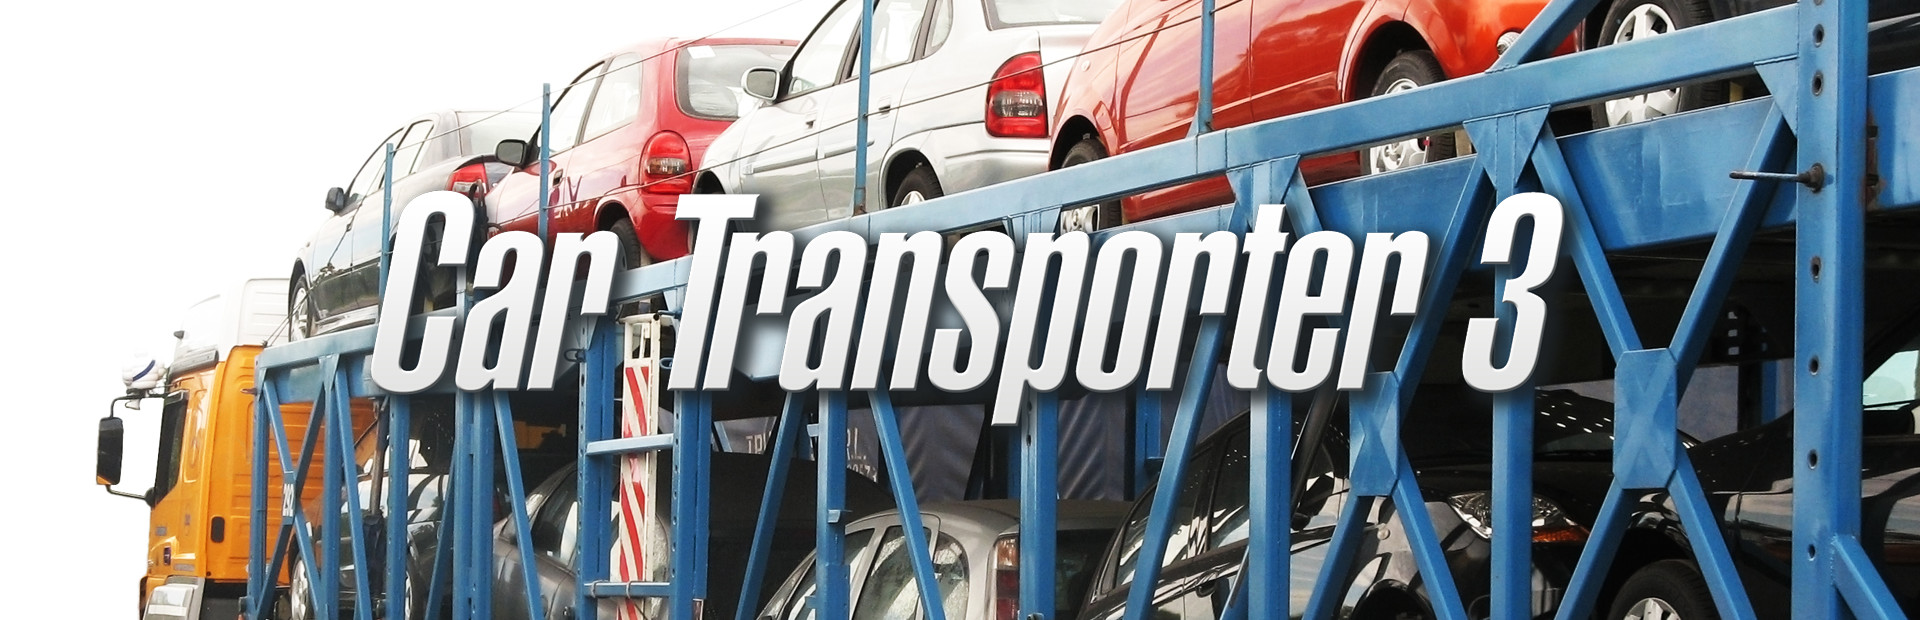 Car Transporter 2013 cover image